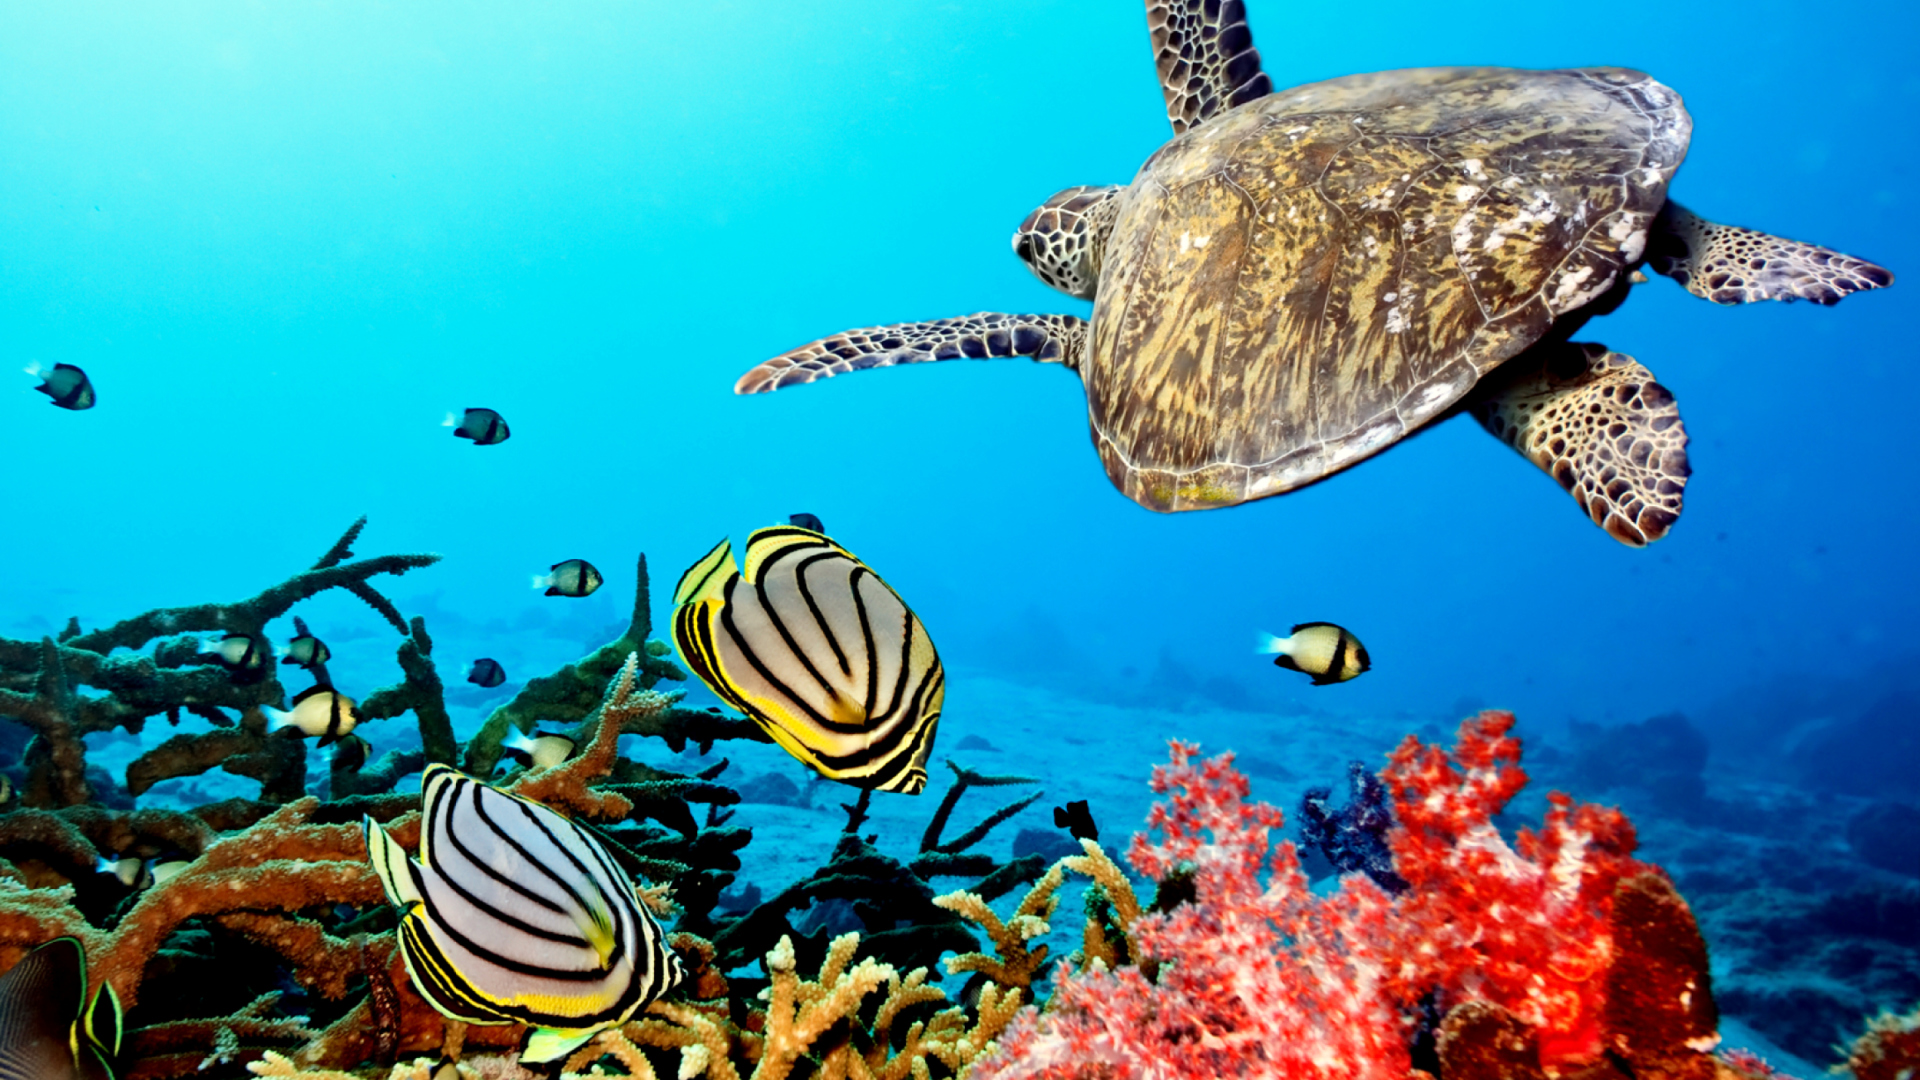 gwalior fort galleria di sfondi,tartaruga di mare,tartaruga di mare,subacqueo,biologia marina,tartaruga verde